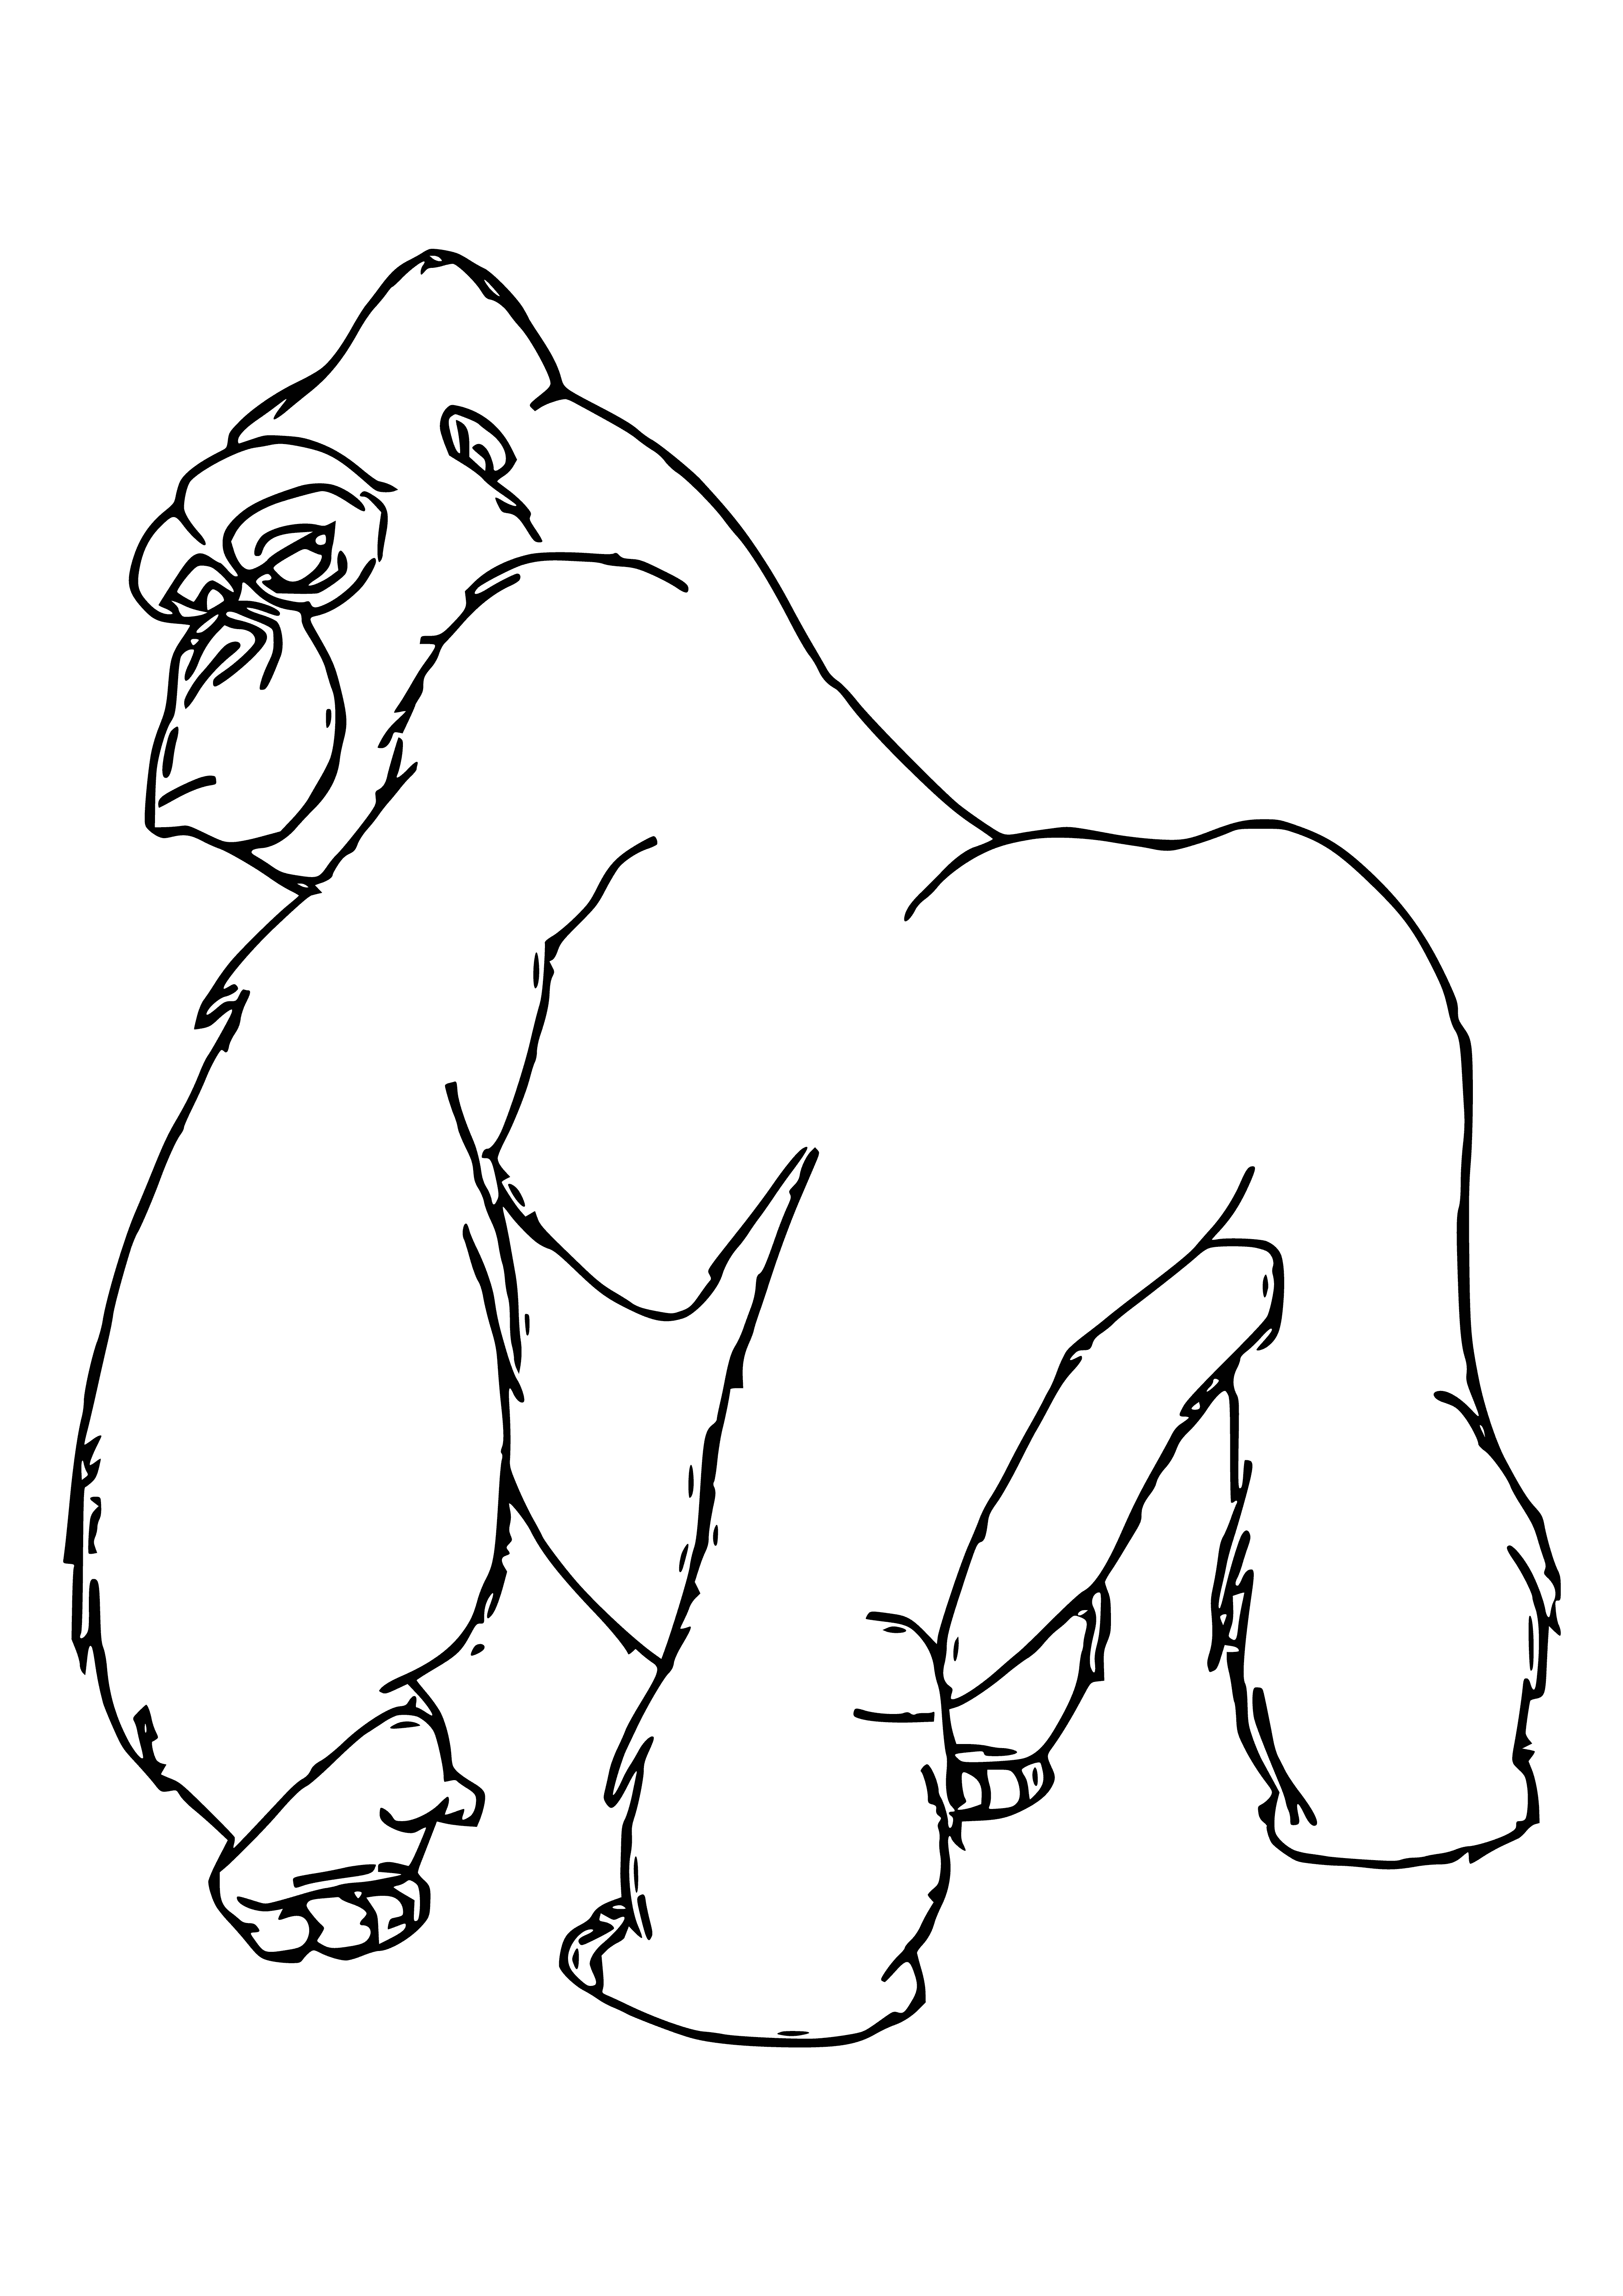 Gorilla Kerchak coloring page